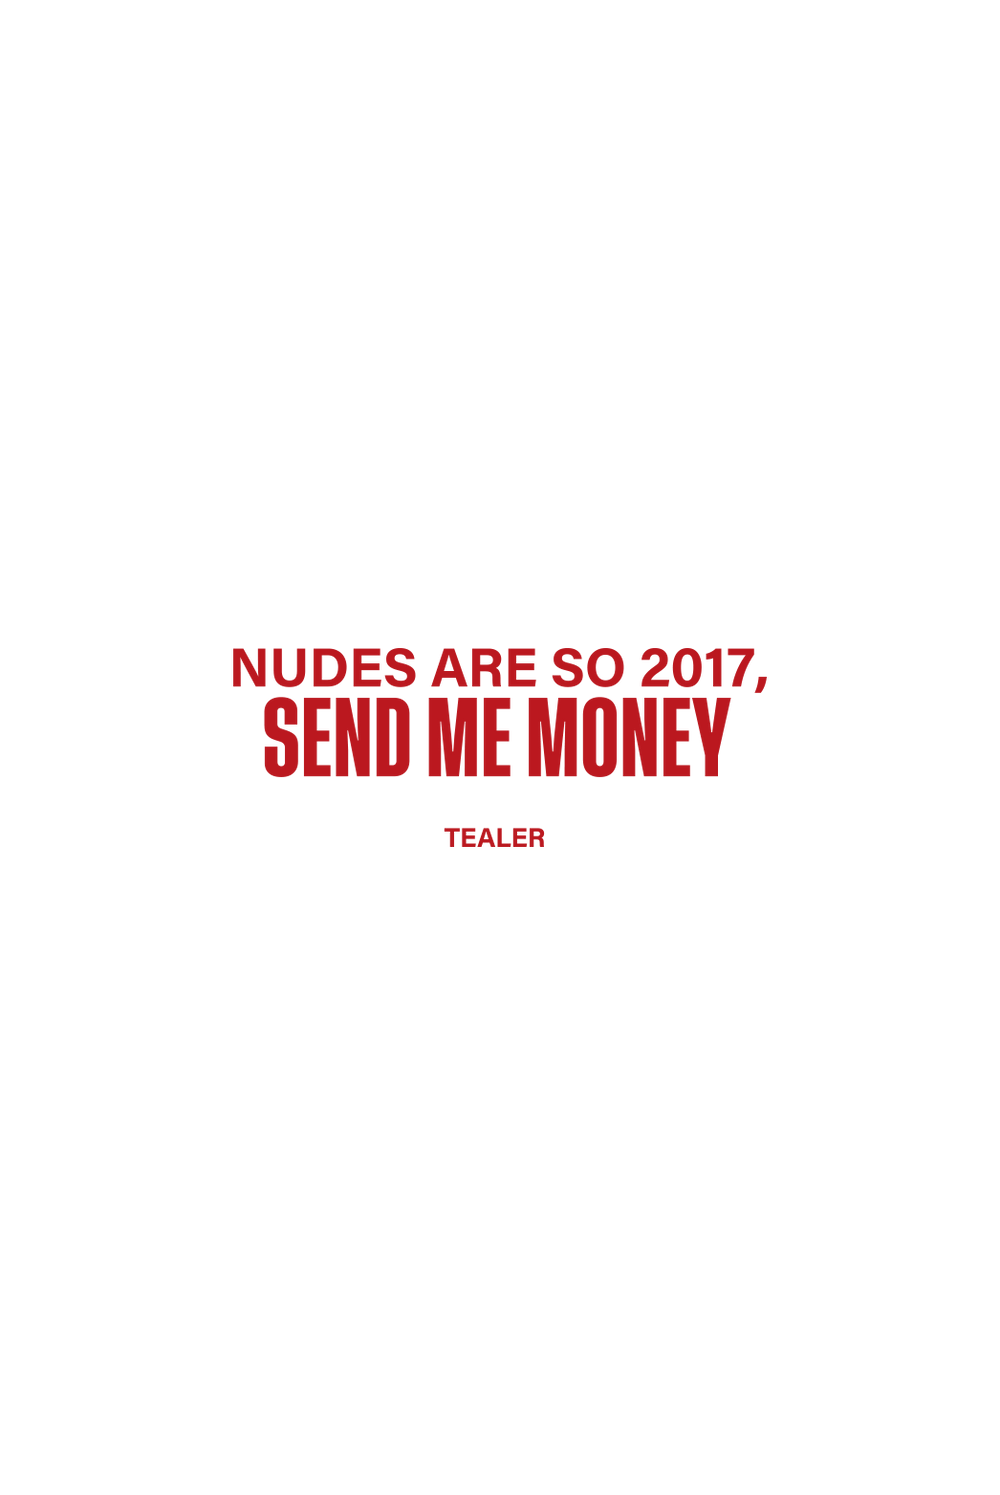 Tealer nudes are so 2017 send me money, Hoodie White